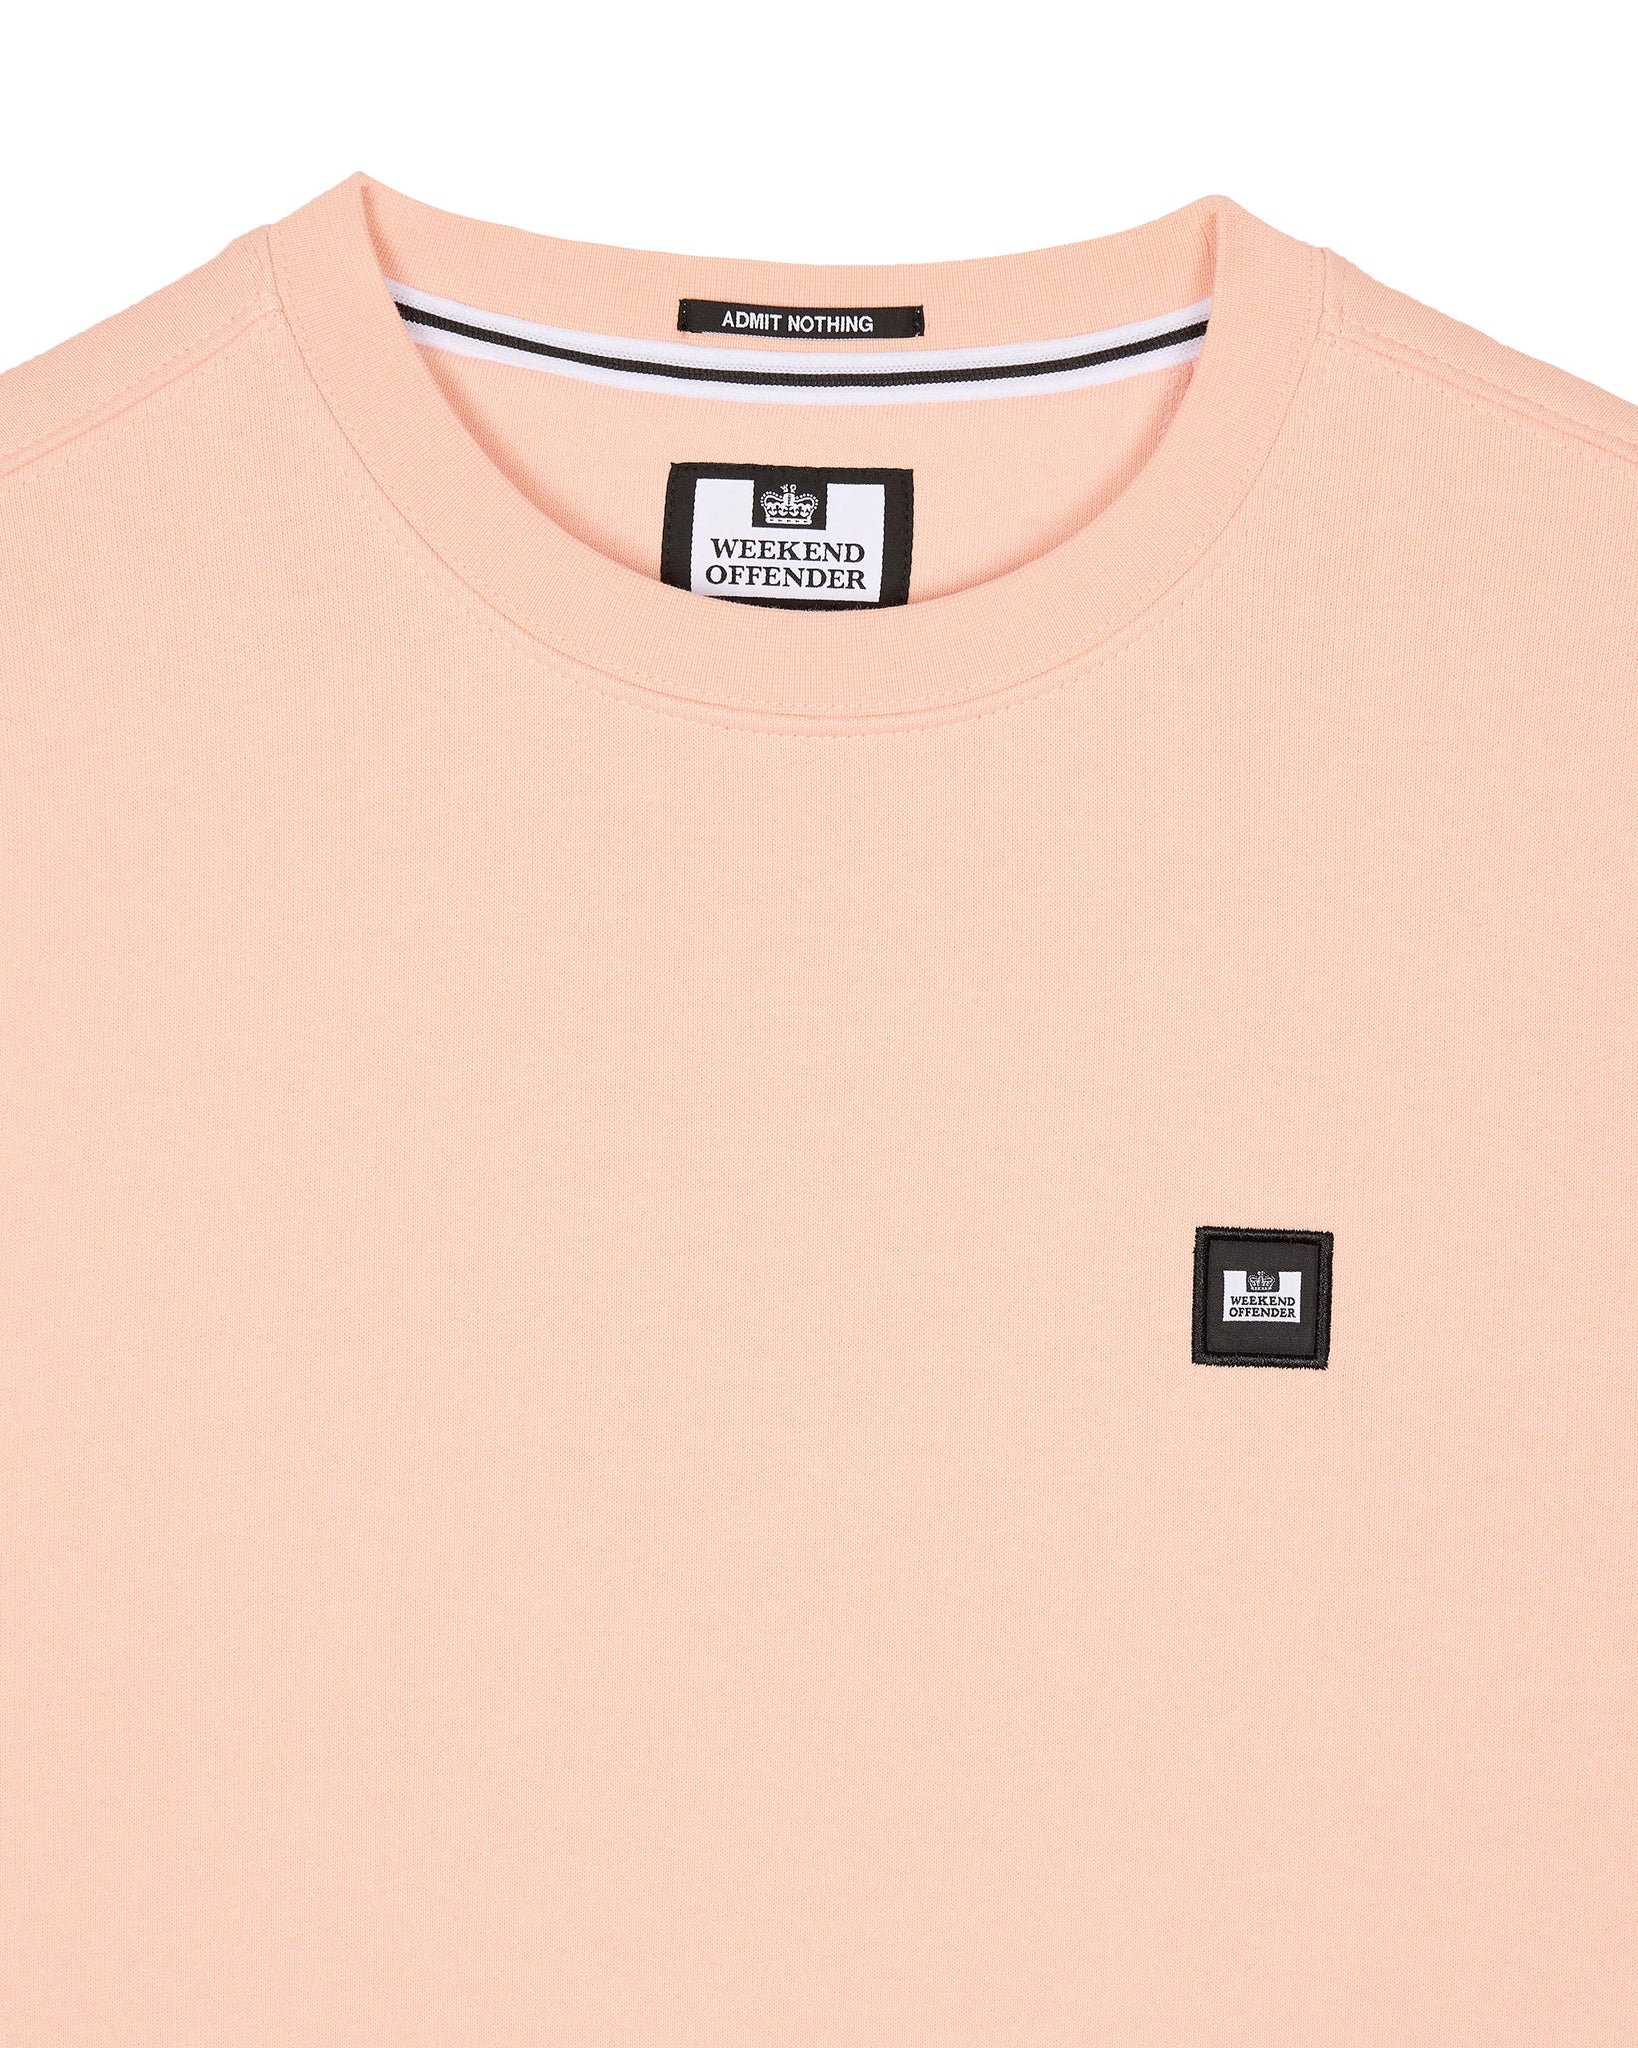 Ferrer Sweatshirt Peachy